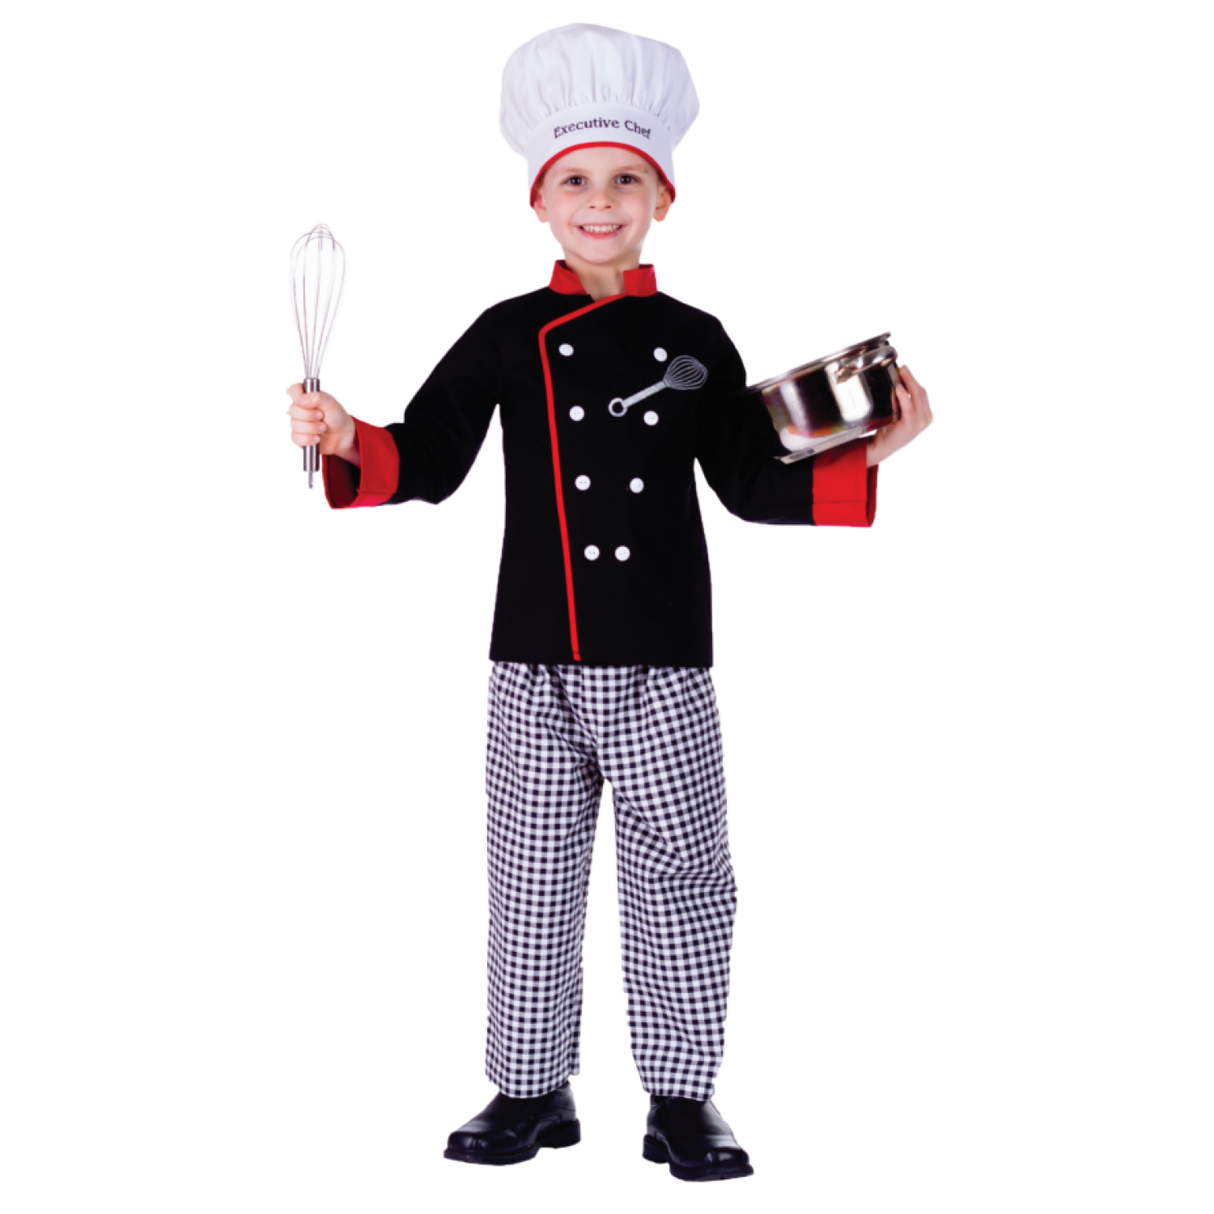 Executive Chef Costume - Kids